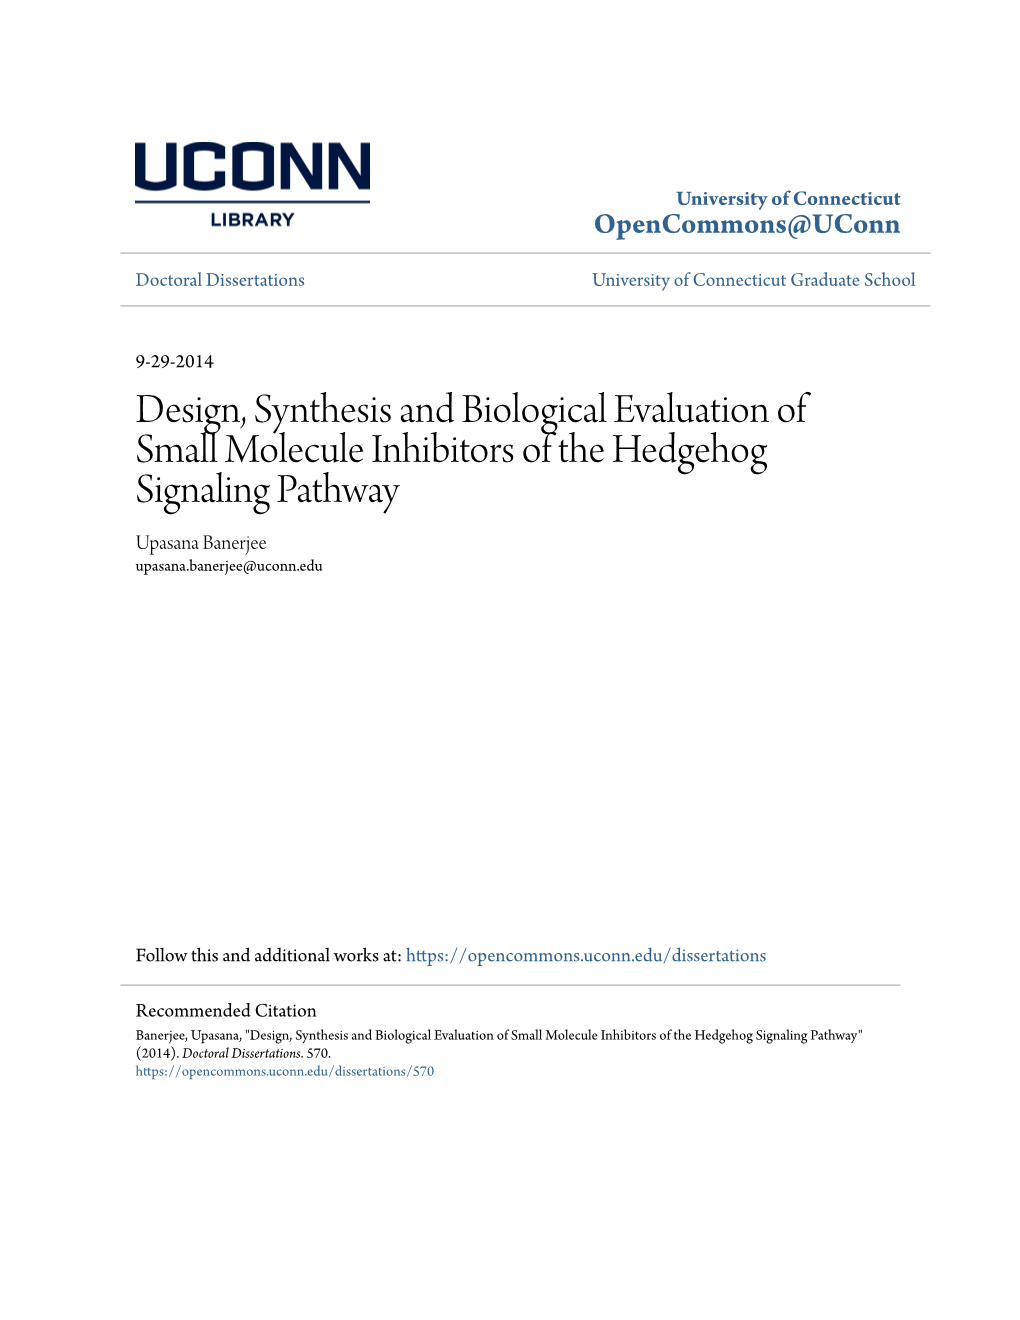 Design, Synthesis and Biological Evaluation of Small Molecule Inhibitors of the Hedgehog Signaling Pathway Upasana Banerjee Upasana.Banerjee@Uconn.Edu